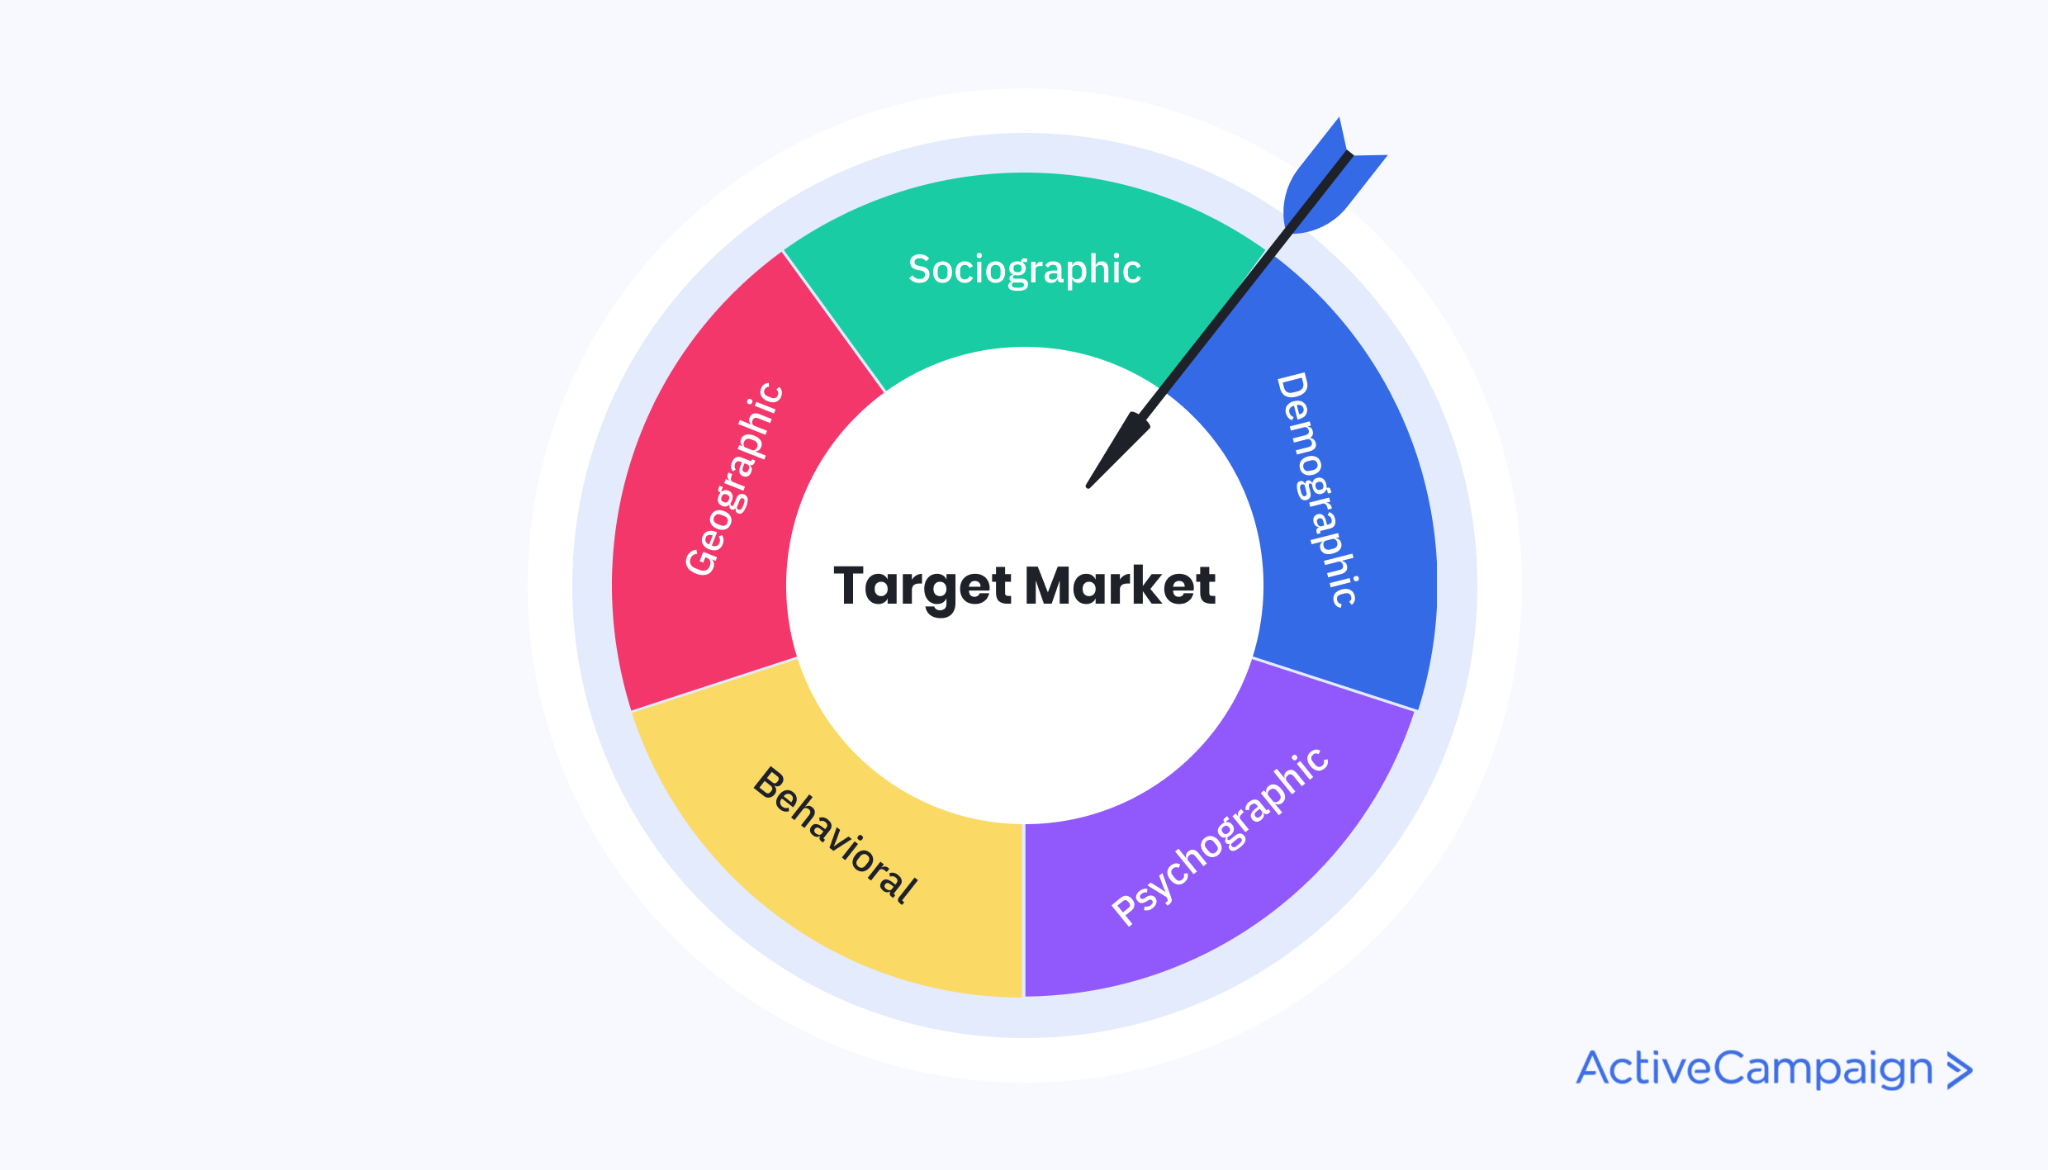 Image of the target market segmentations